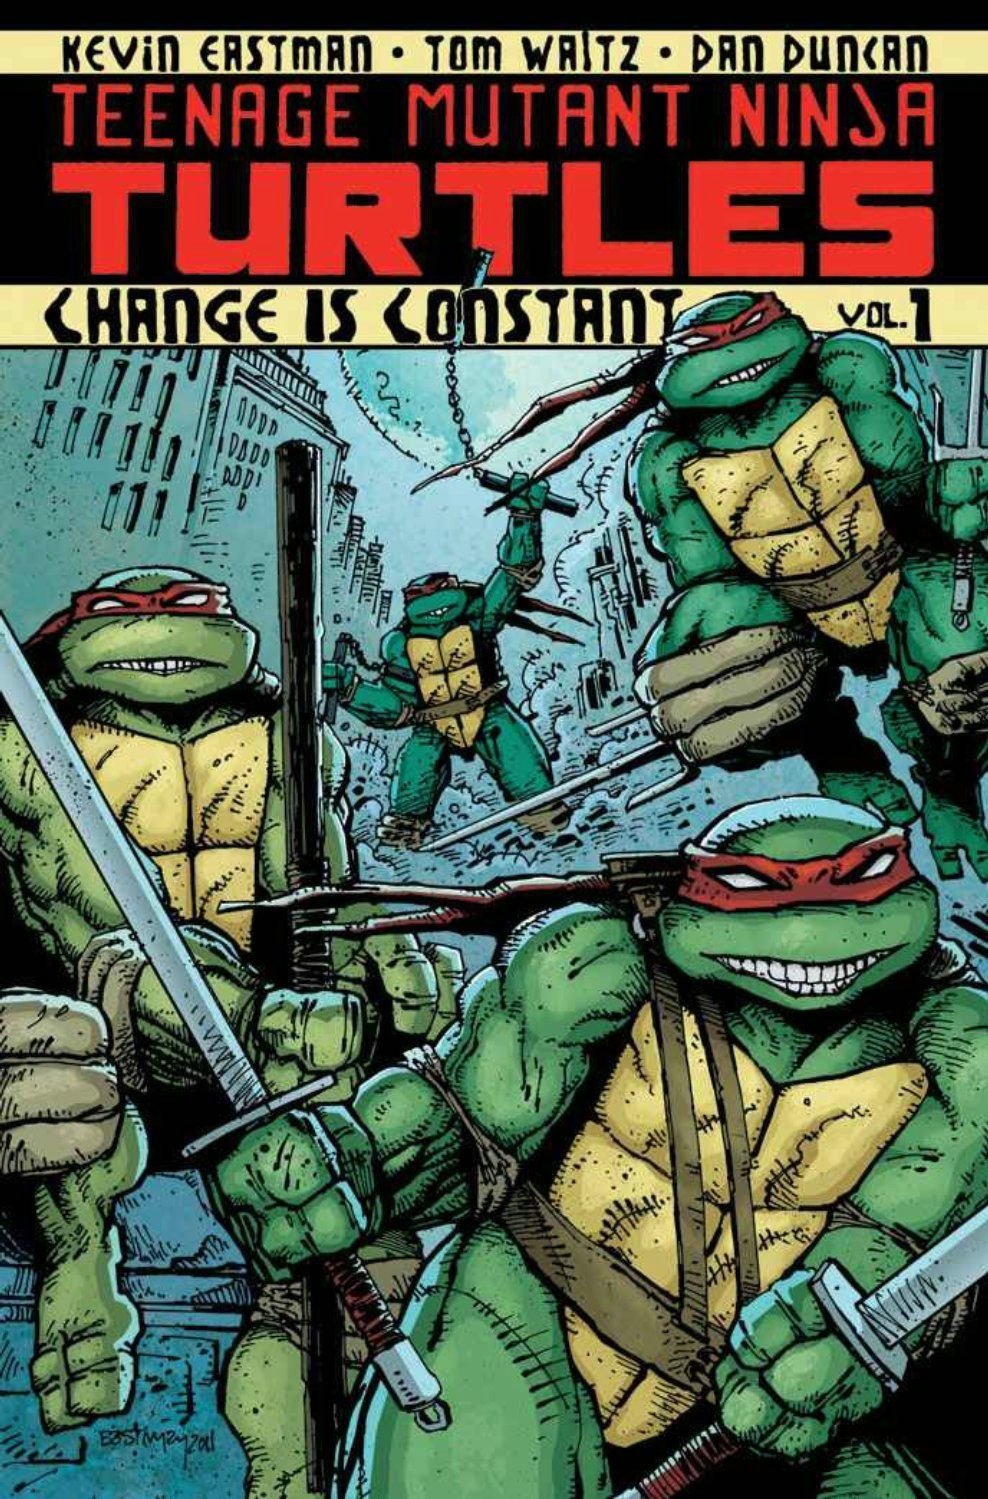 Teenage Mutant Ninja Turtles Volume 1: Change is Constant – other